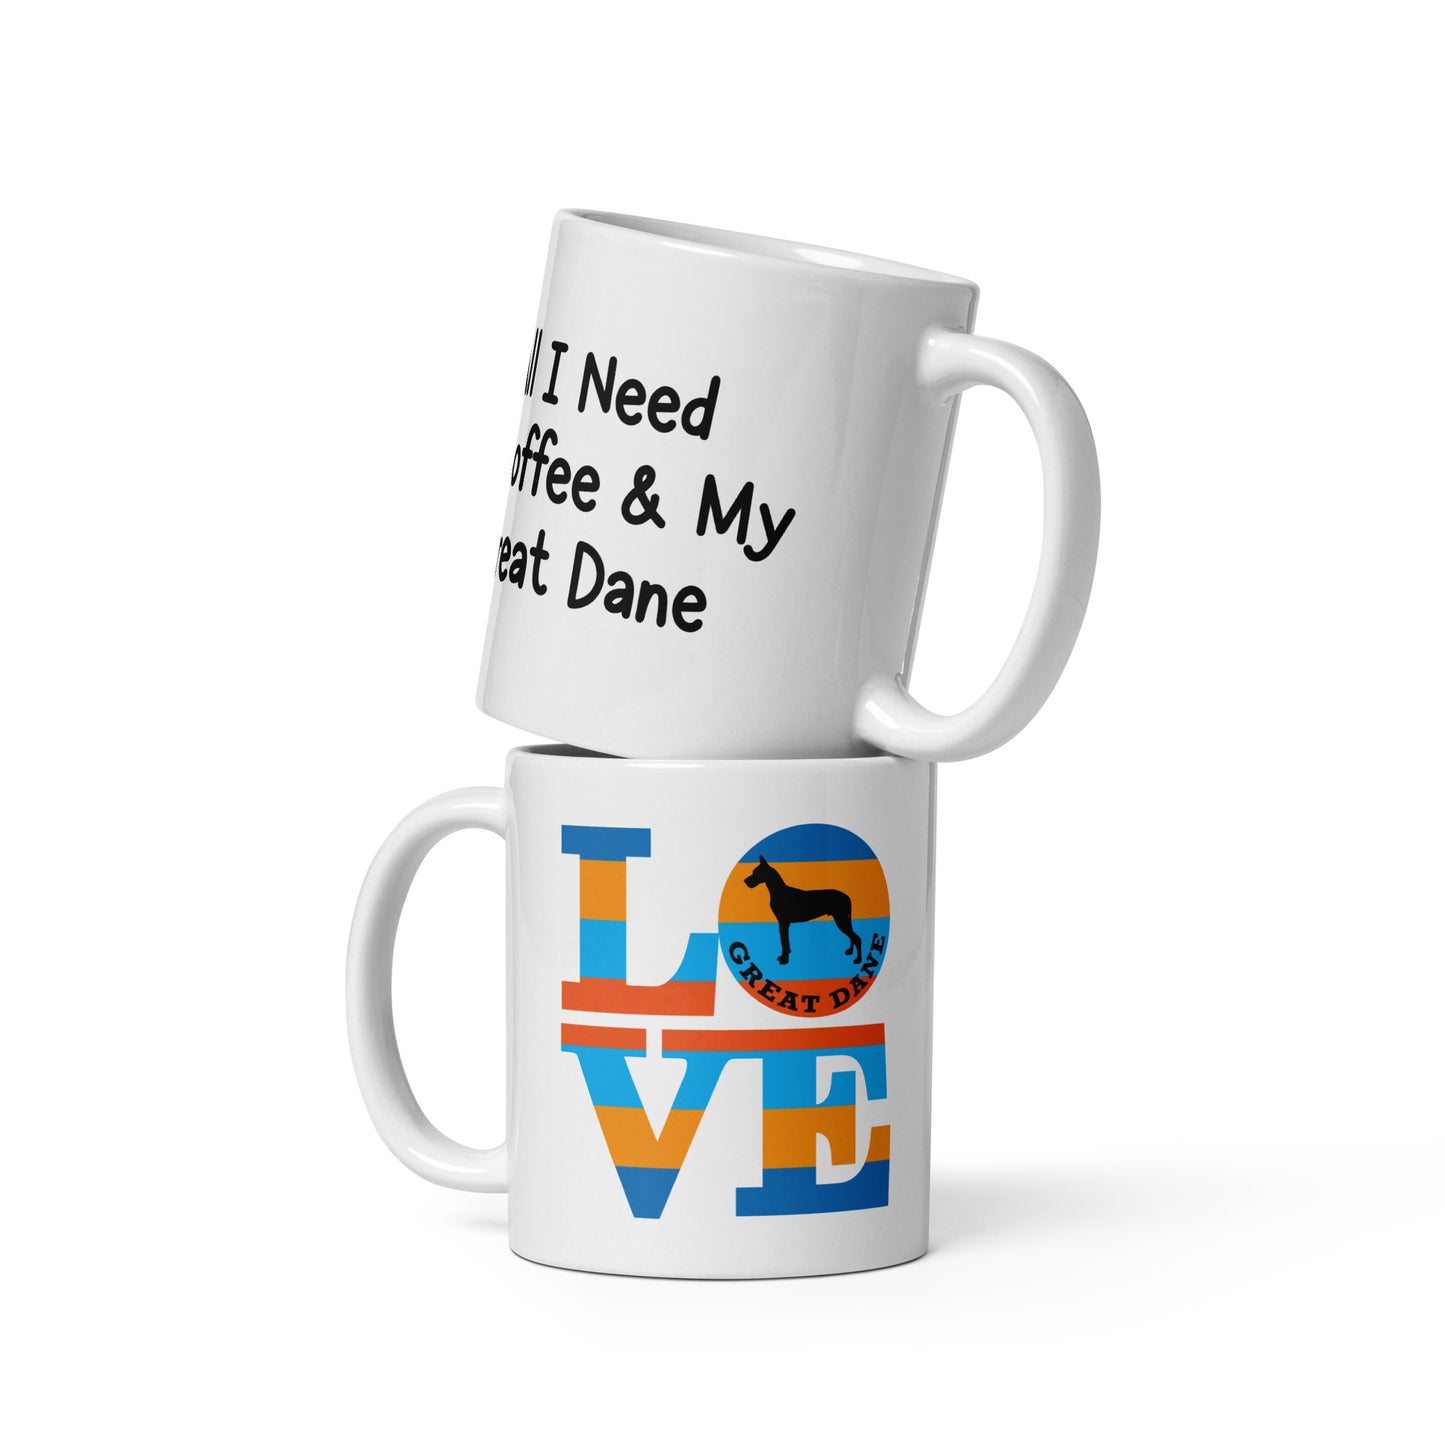 All I need is coffee & my Great Dane mug by Dog Artistry.